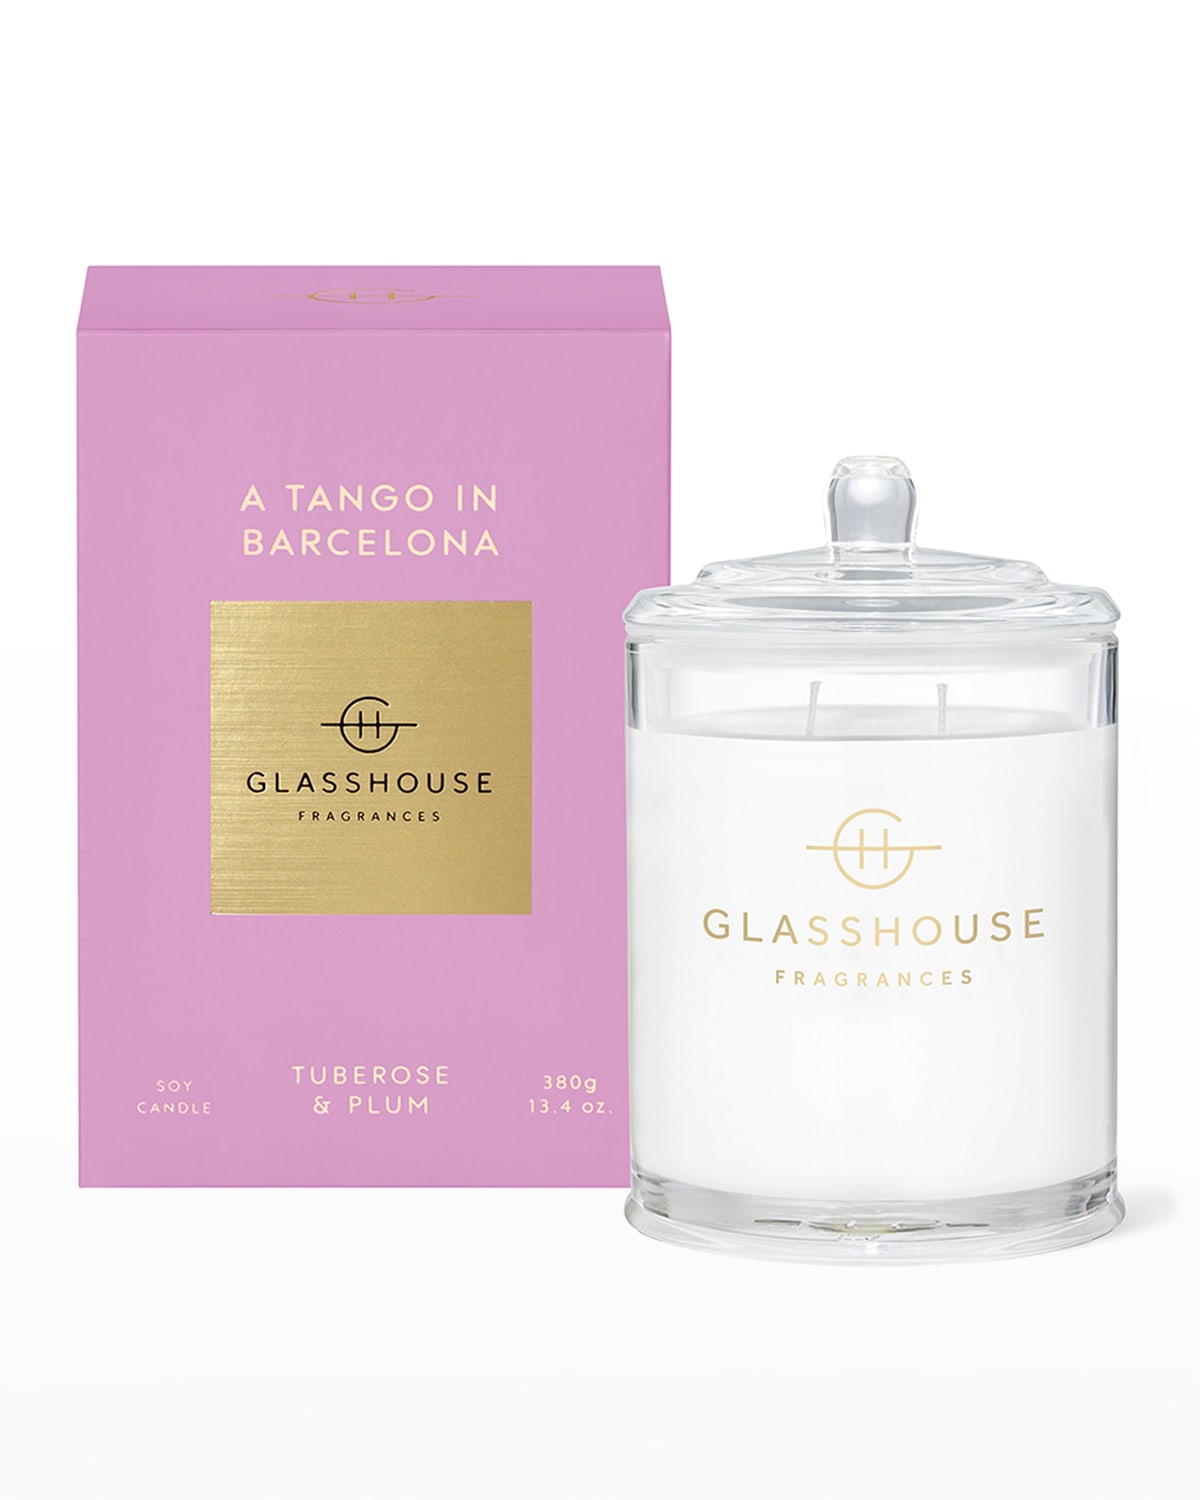 Glasshouse Fragrances 13.4 Oz. A Tango In Barcelona Candle